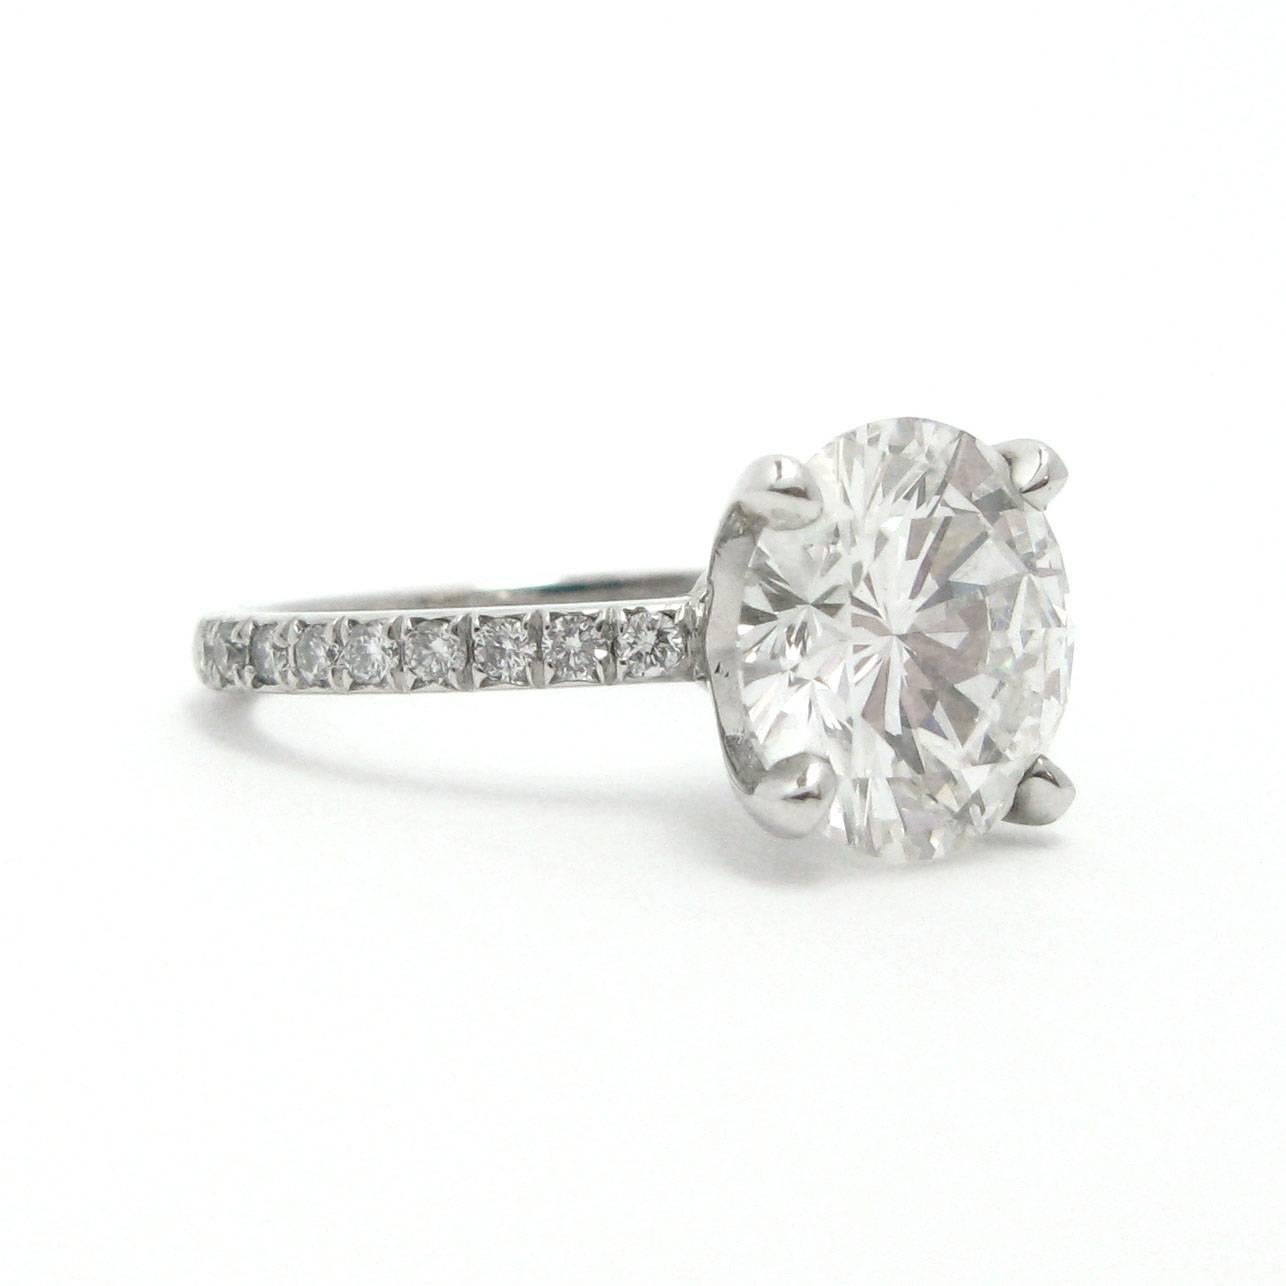 4.02 carat diamond ring